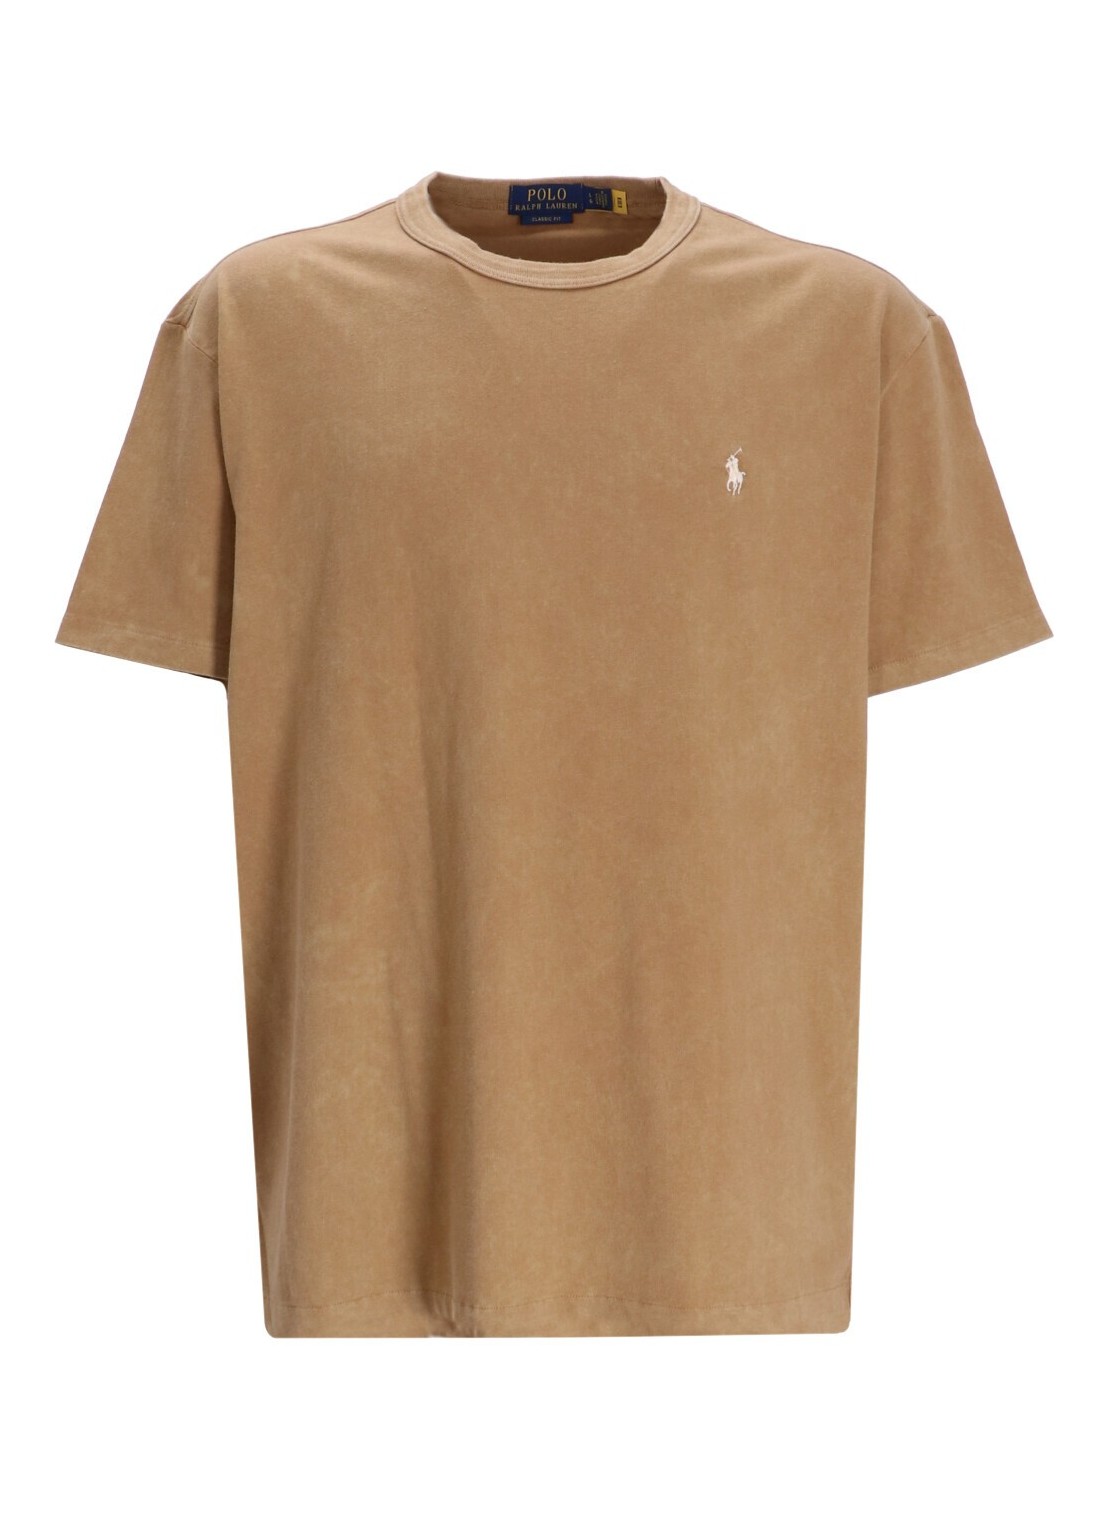 Camiseta polo ralph lauren t-shirt man sscnm6-short sleeve-t-shirt 710916698004 rustic tan talla M
 